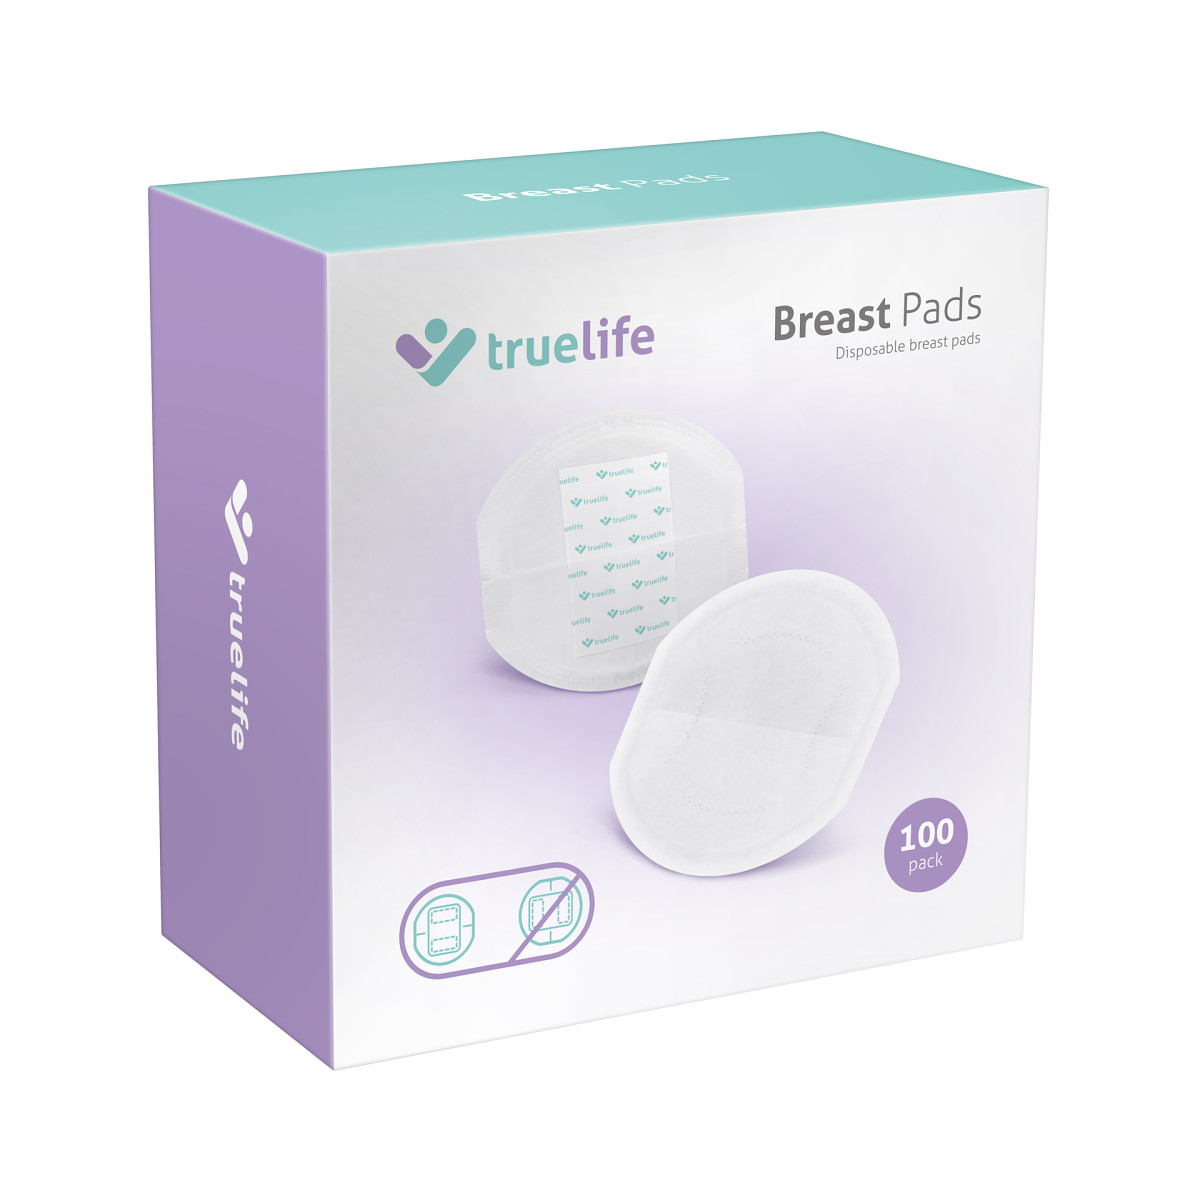 TrueLife Breast Pads – komfort v každé situaci